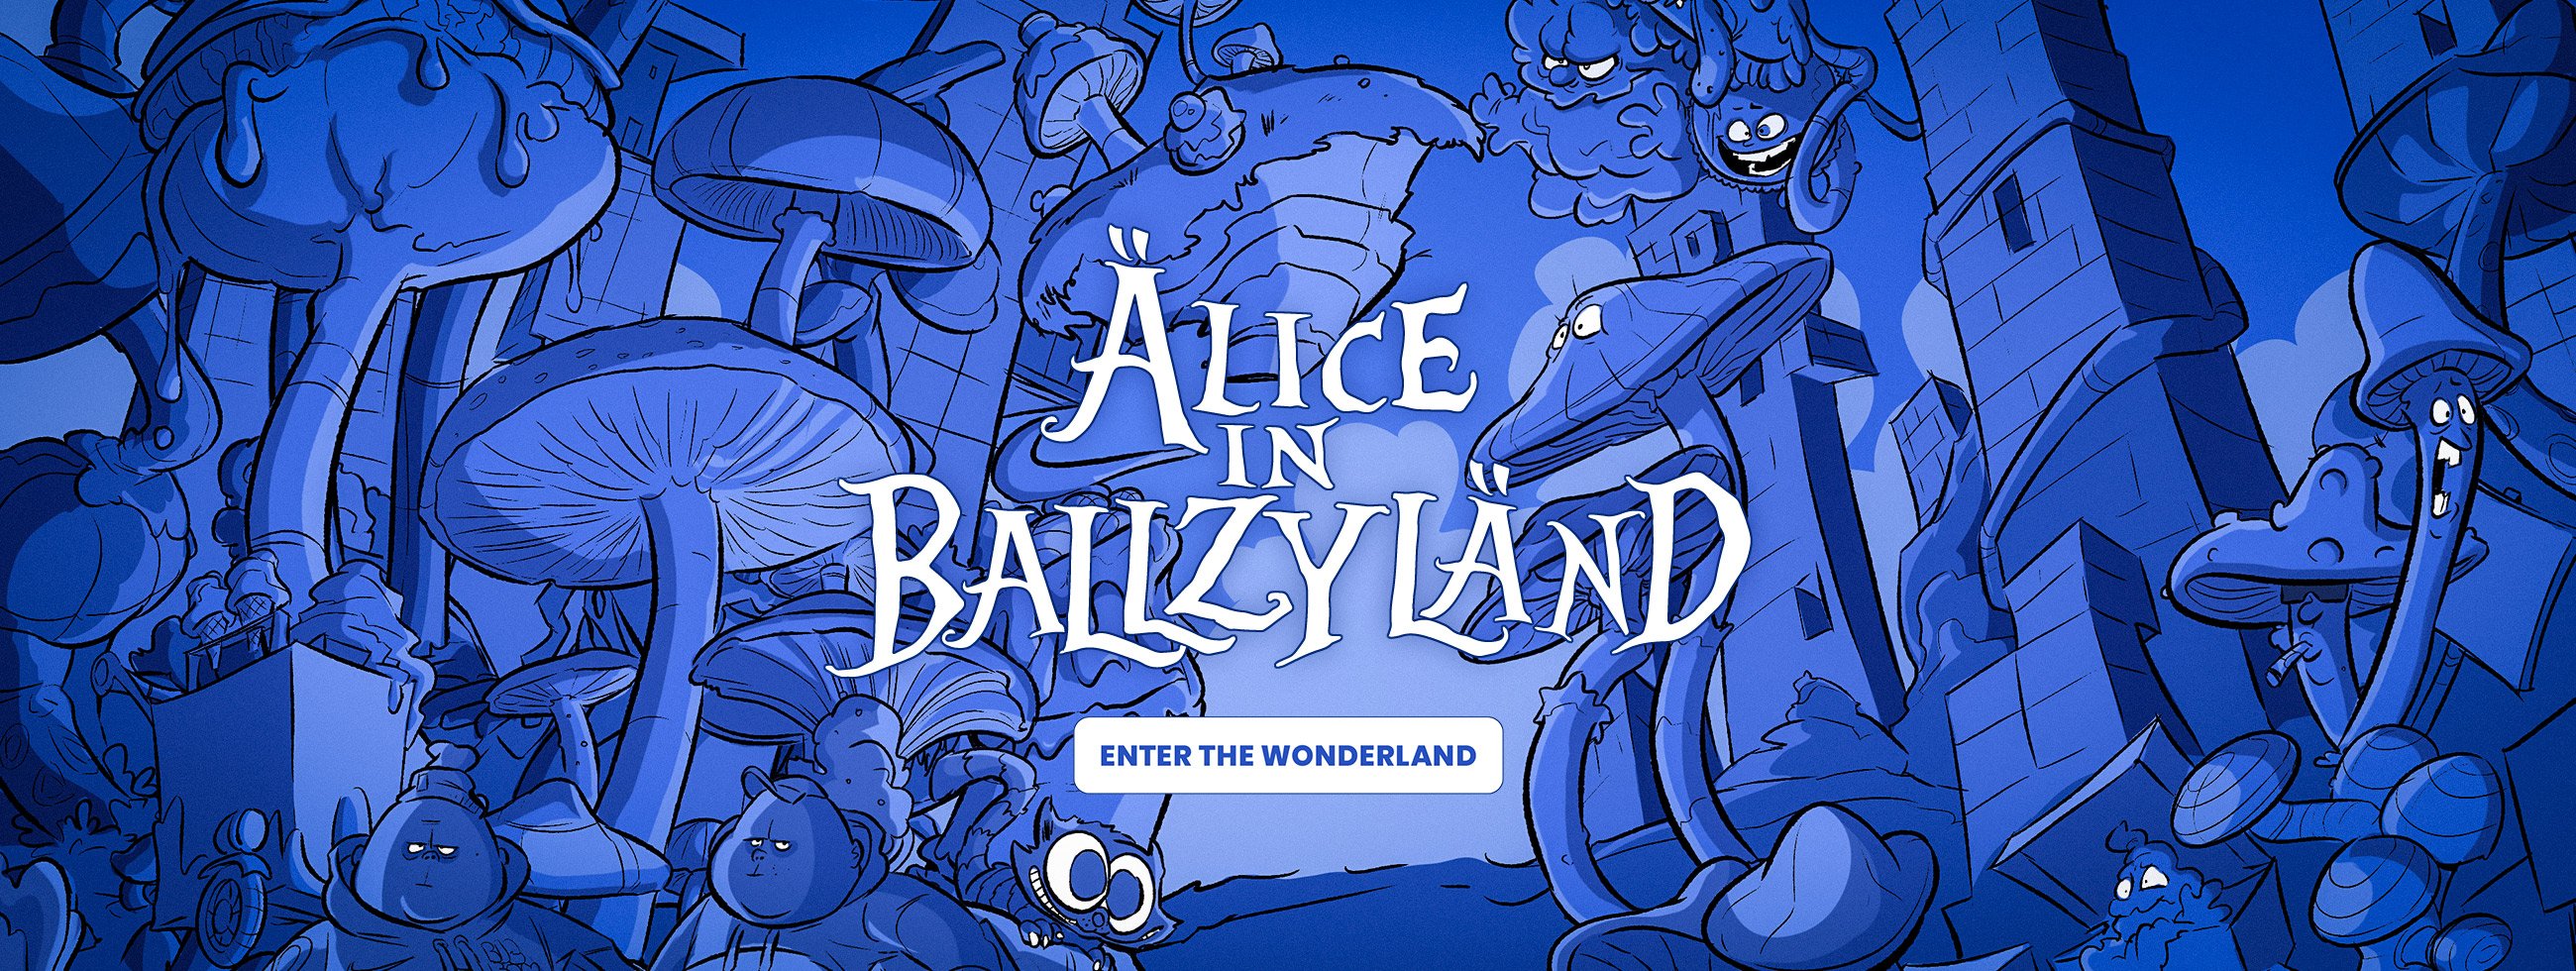 Alice in Ballzyland - LT